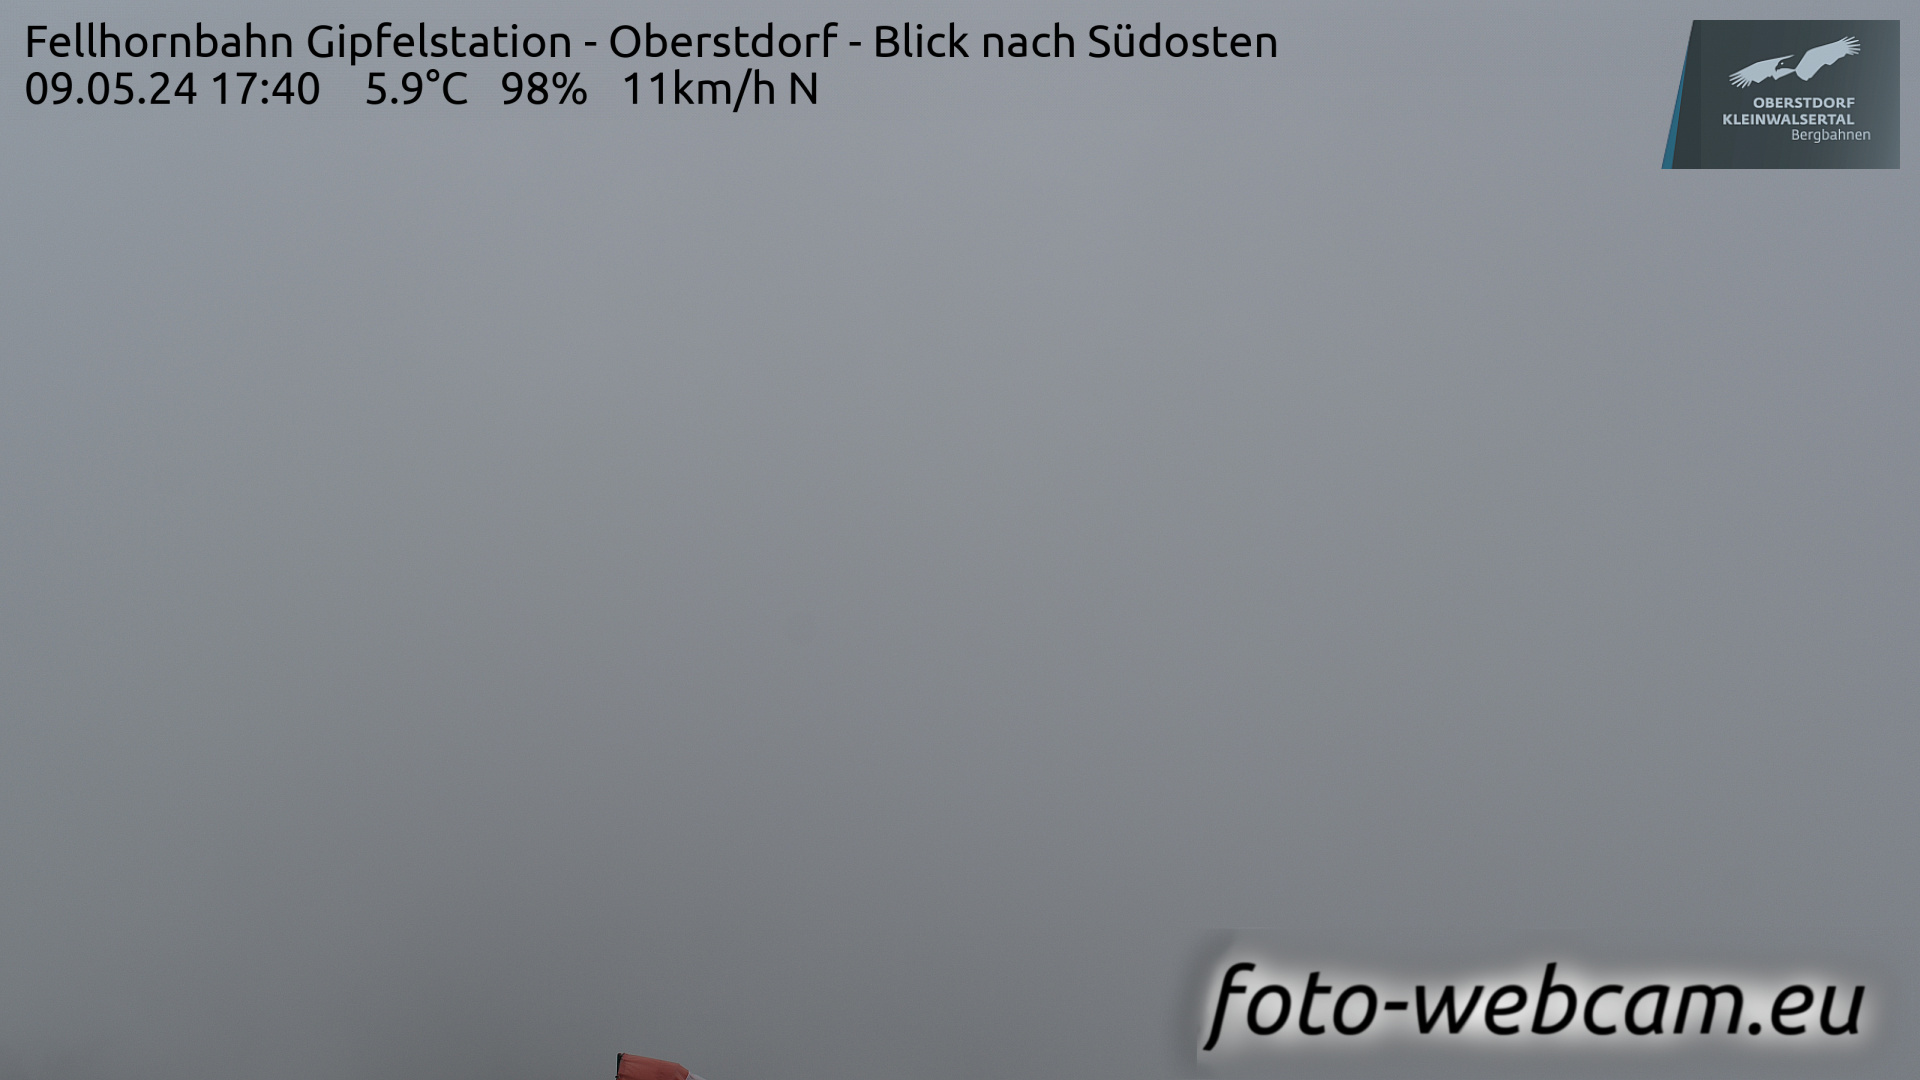 Oberstdorf Wed. 17:49